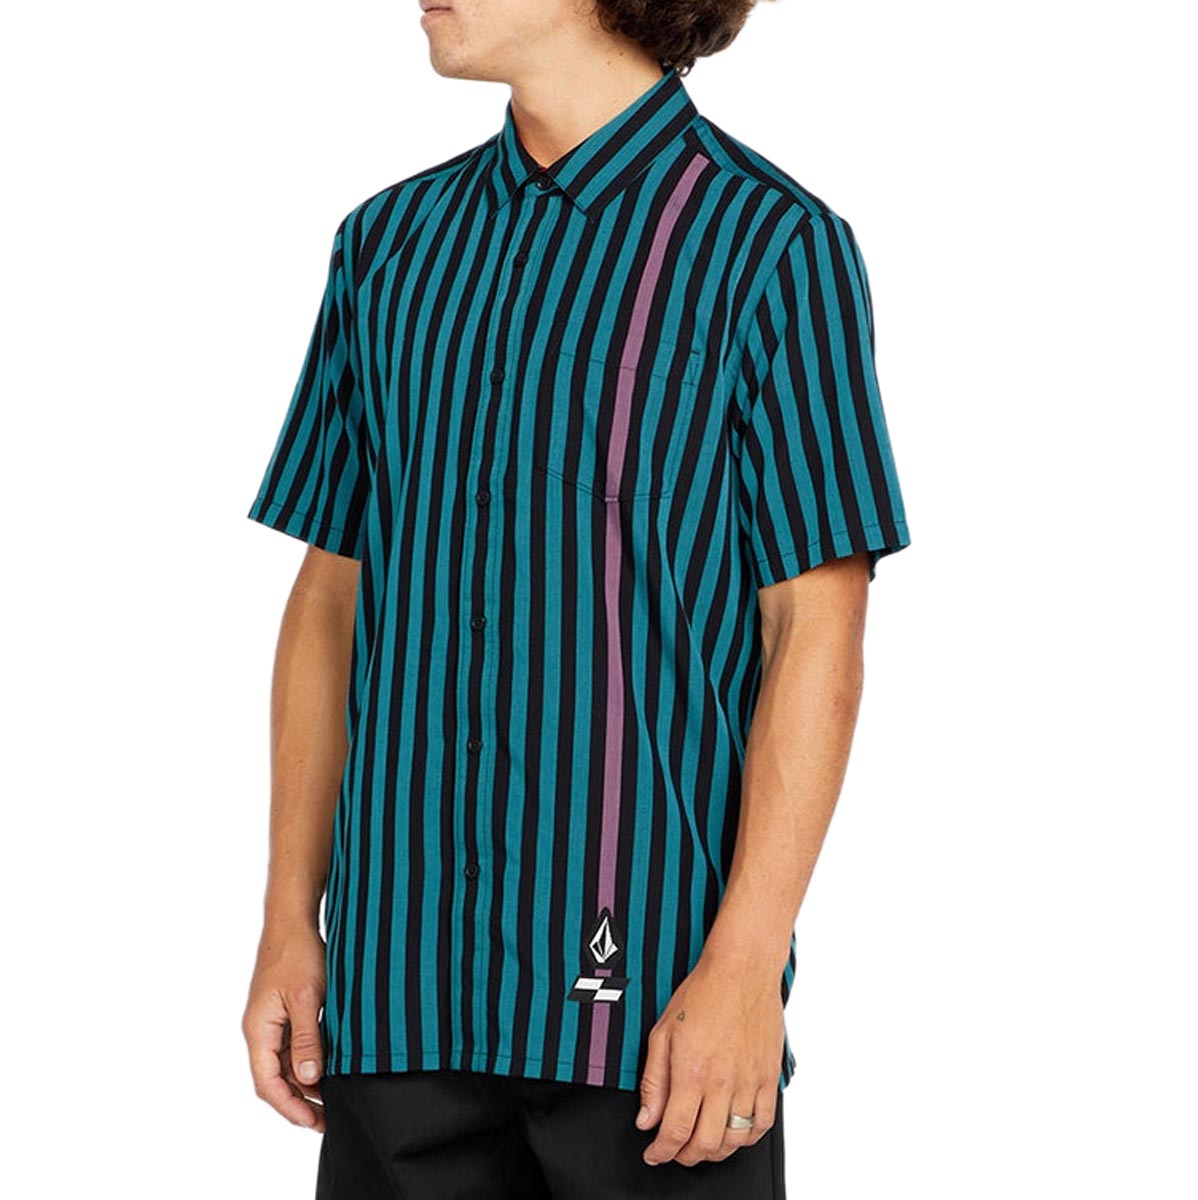 Volcom x Schroff Stripe Shirt - Dusty Aqua image 1